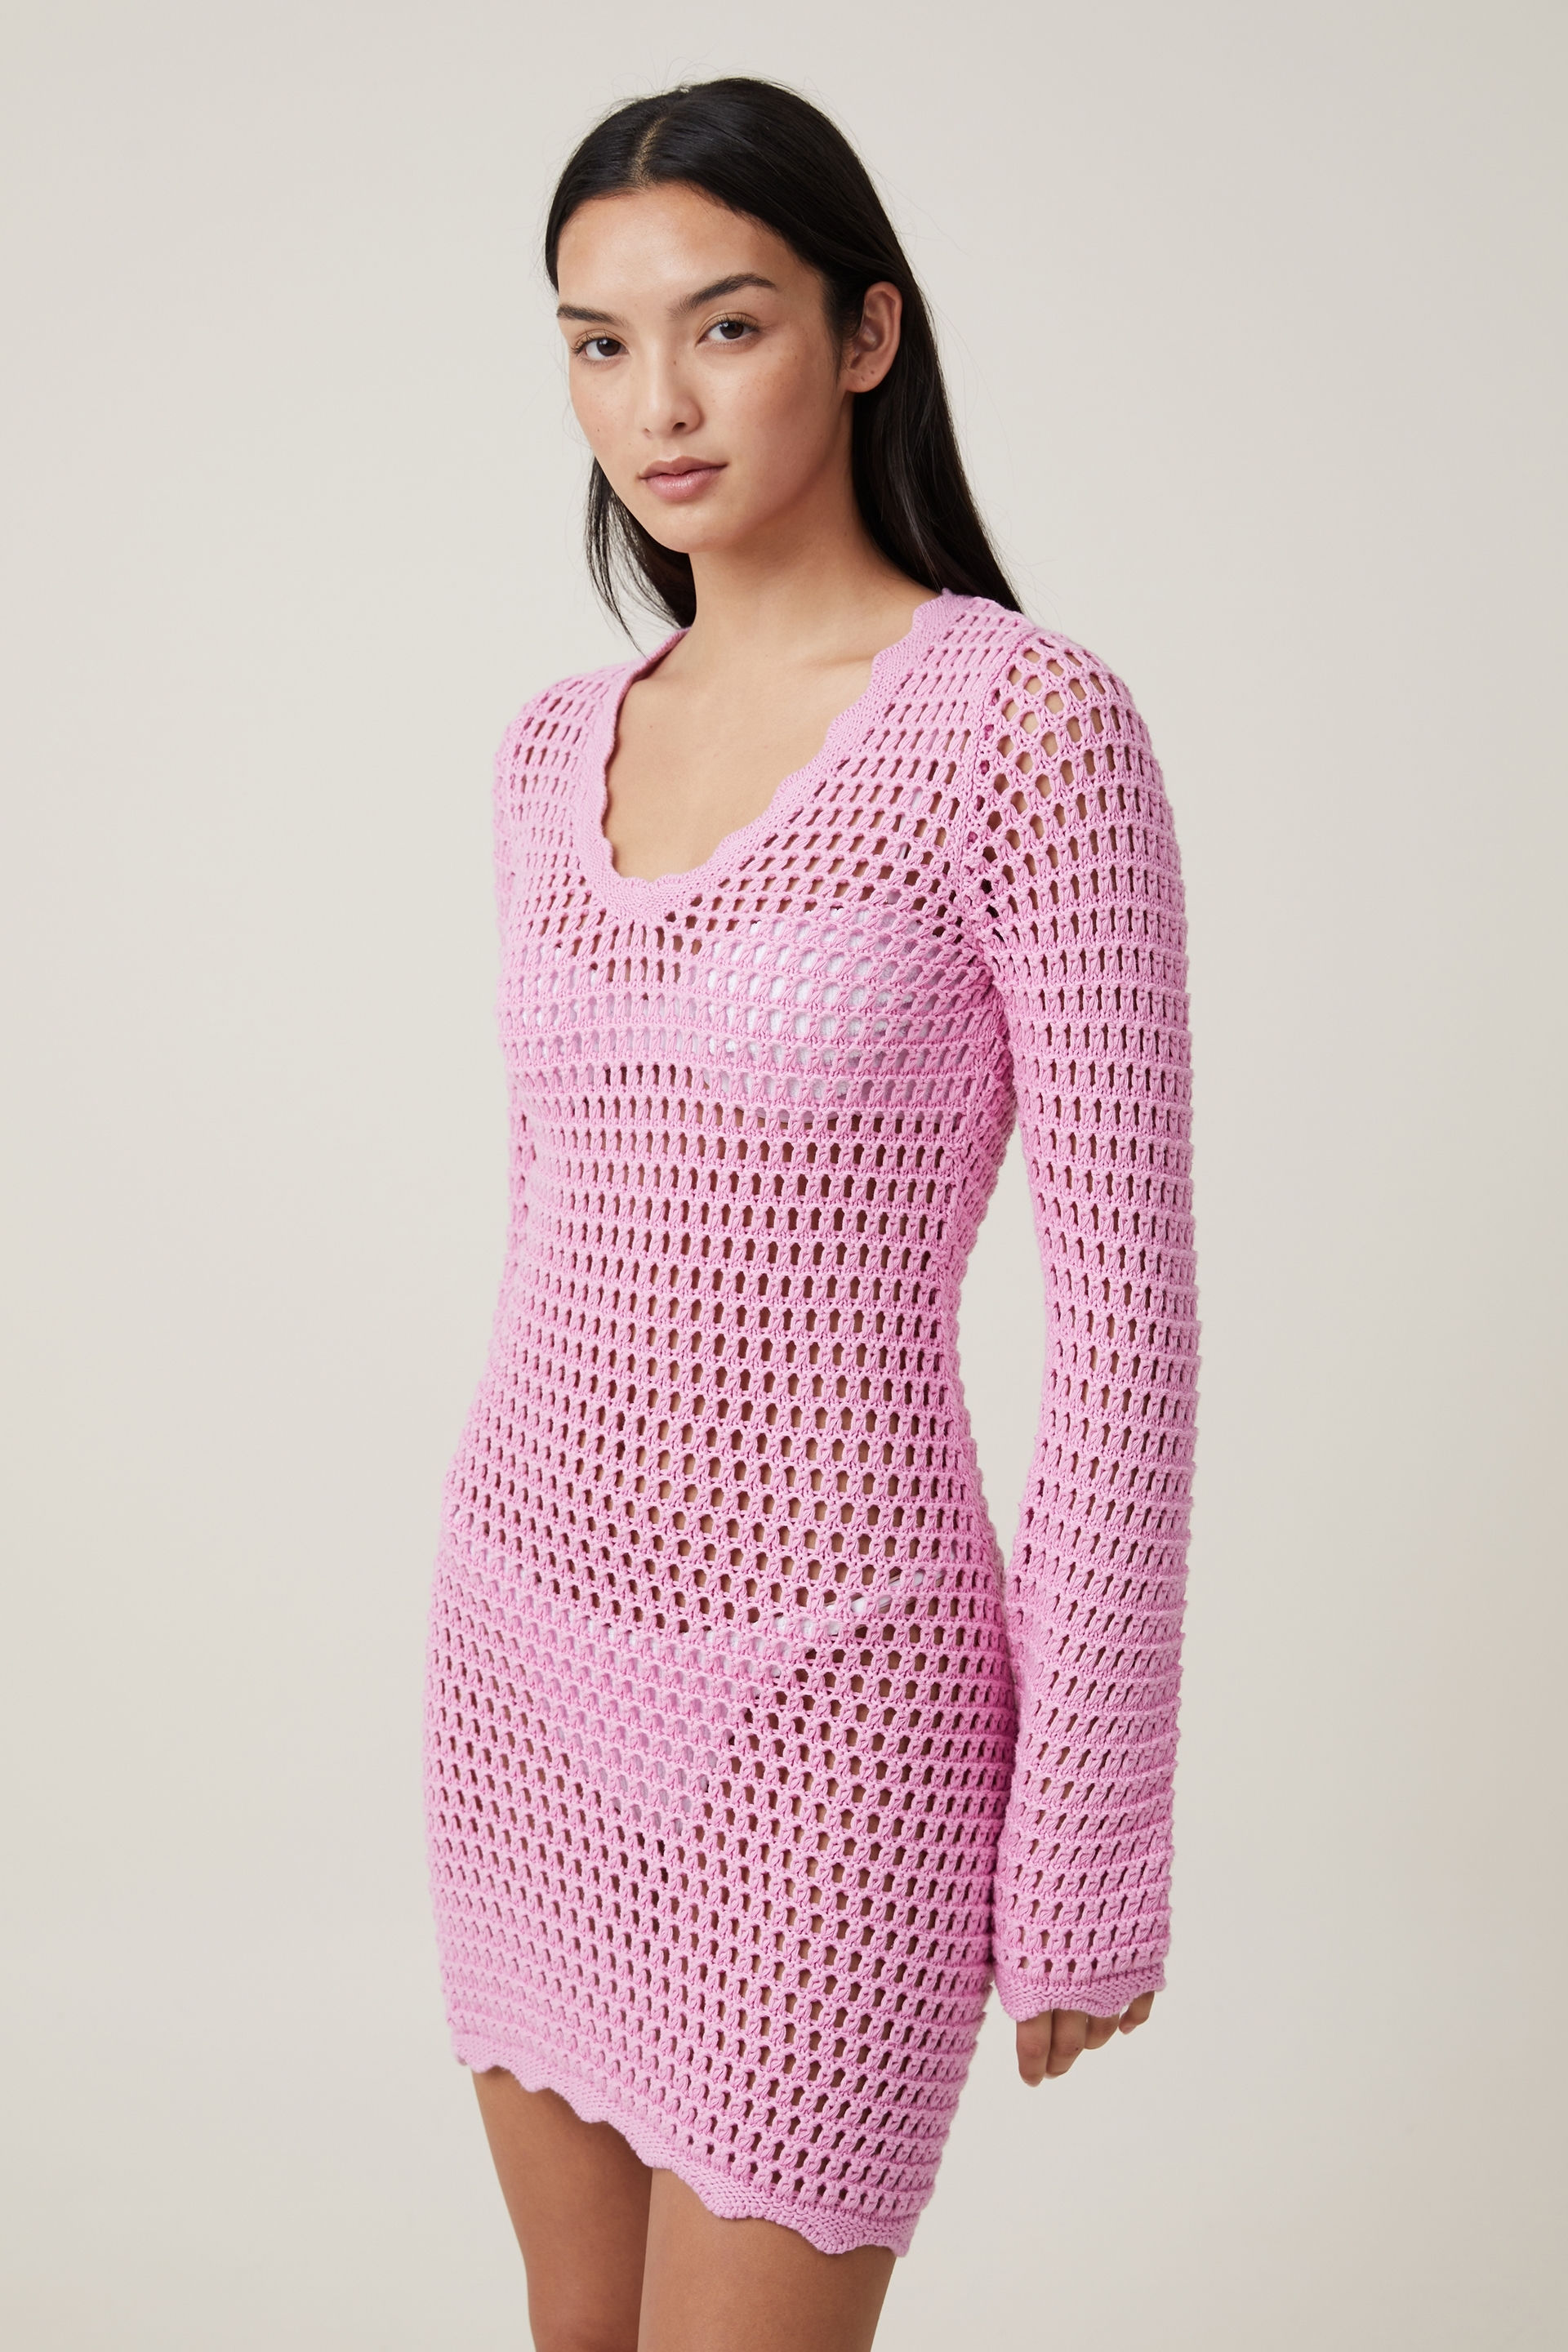 Cotton On Women - Crochet Long Sleeve Mini Dress - Candy pink